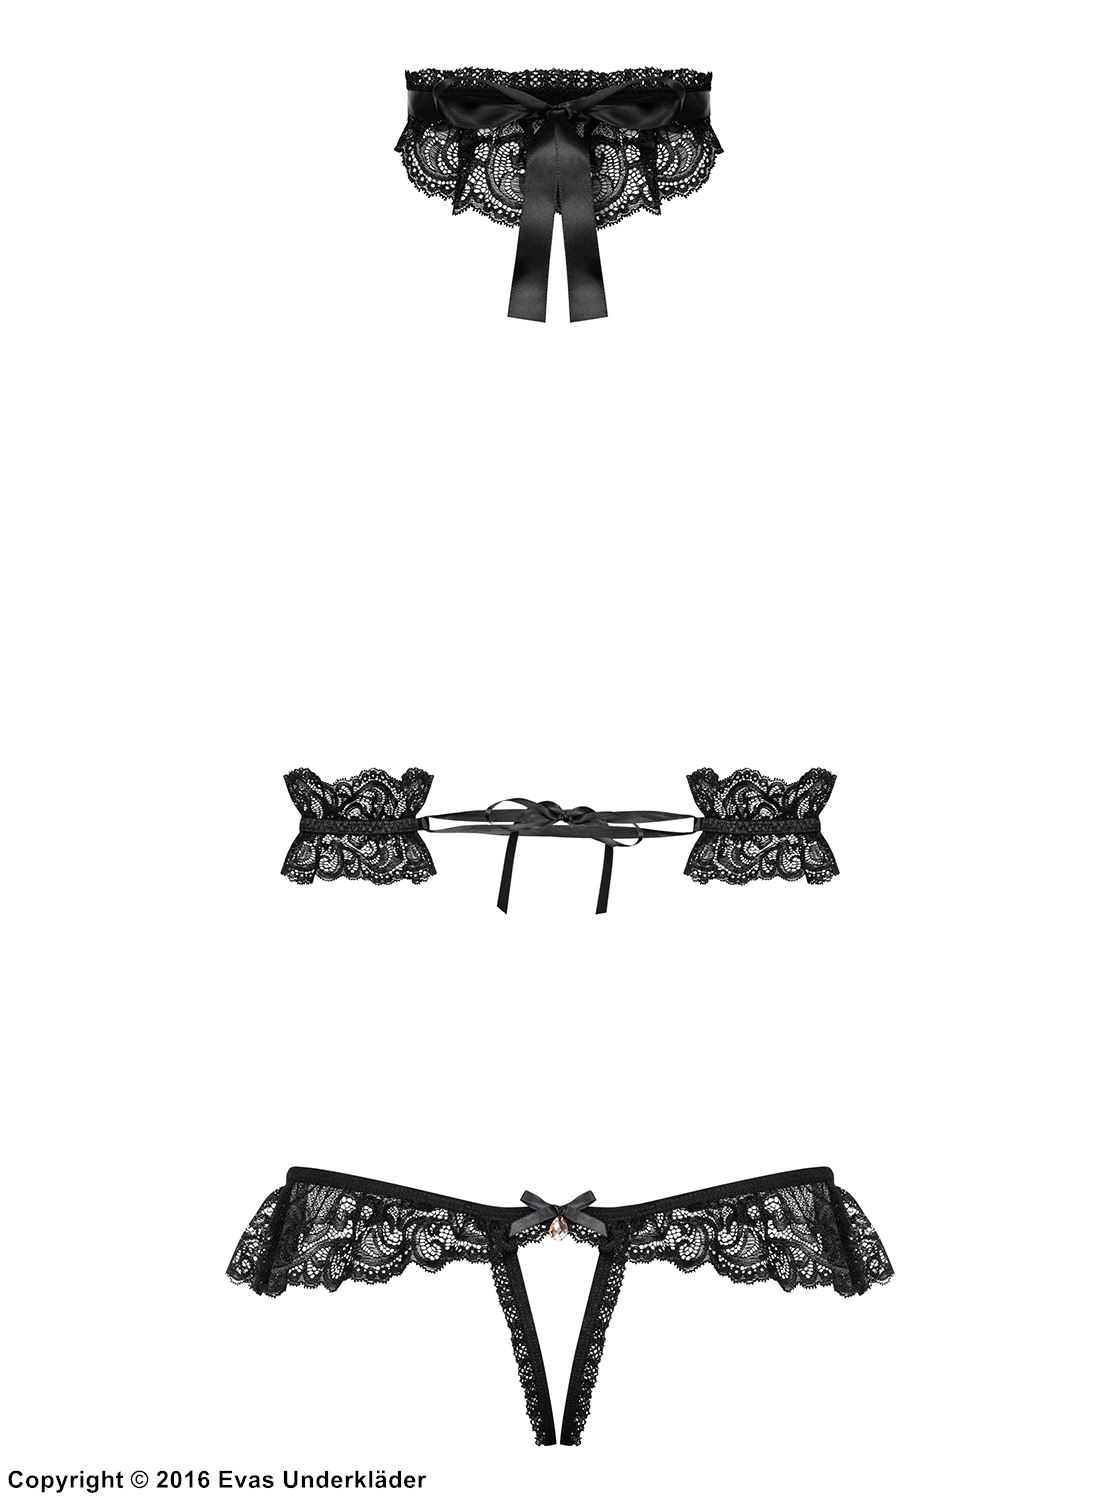 Sexy lingerie set, lace ruffles